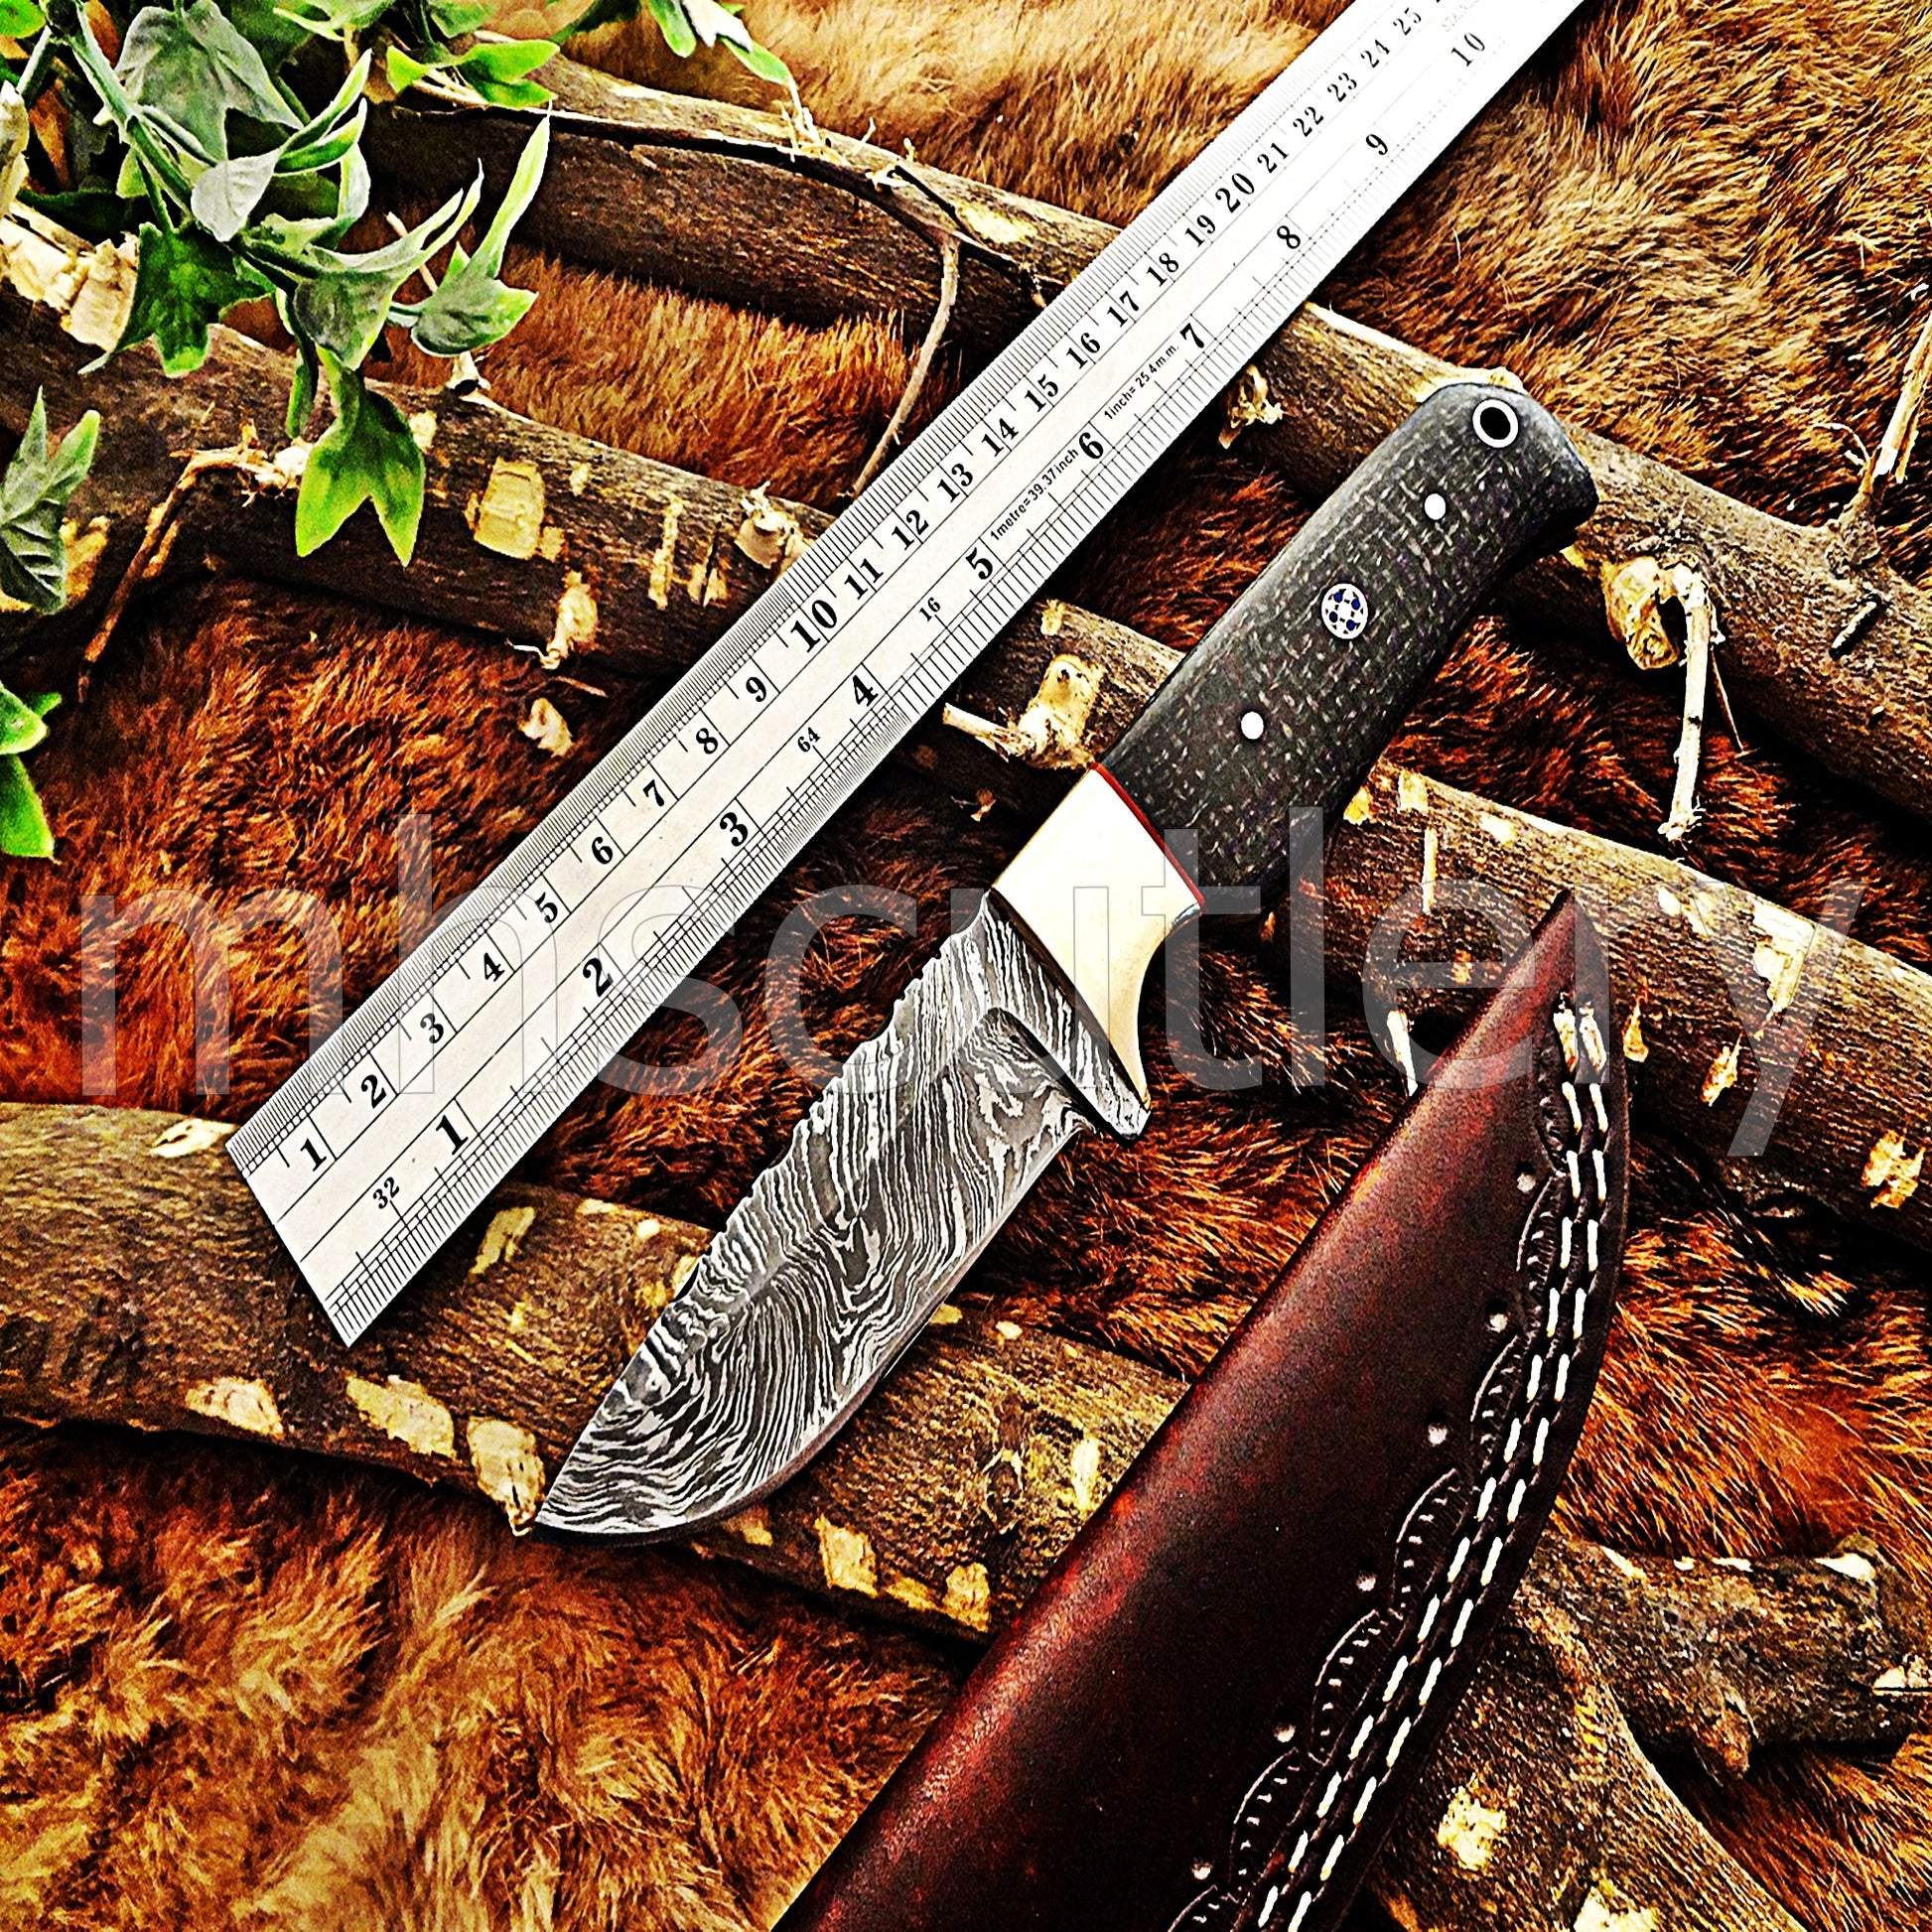 Handmade Damascus Steel Micarta Skinner Knife | mhscutlery